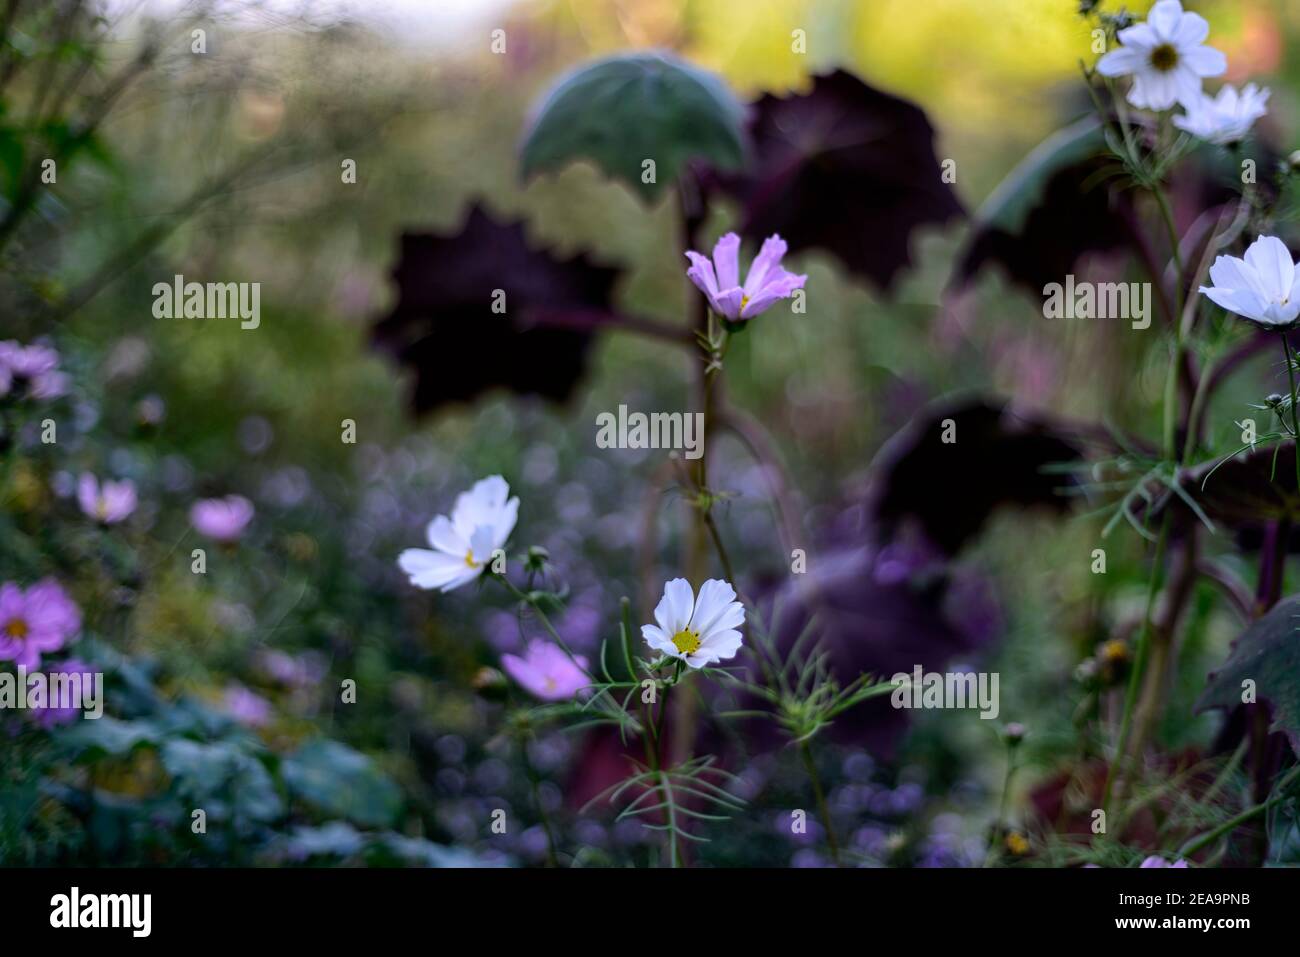 white cosmos cosmos flowers,flowering,senecio cristobalensis,Roldana petasitis,Red Leaved Velvet Senecio,purple leaf,leaves,foliage,mixed planting sch Stock Photo